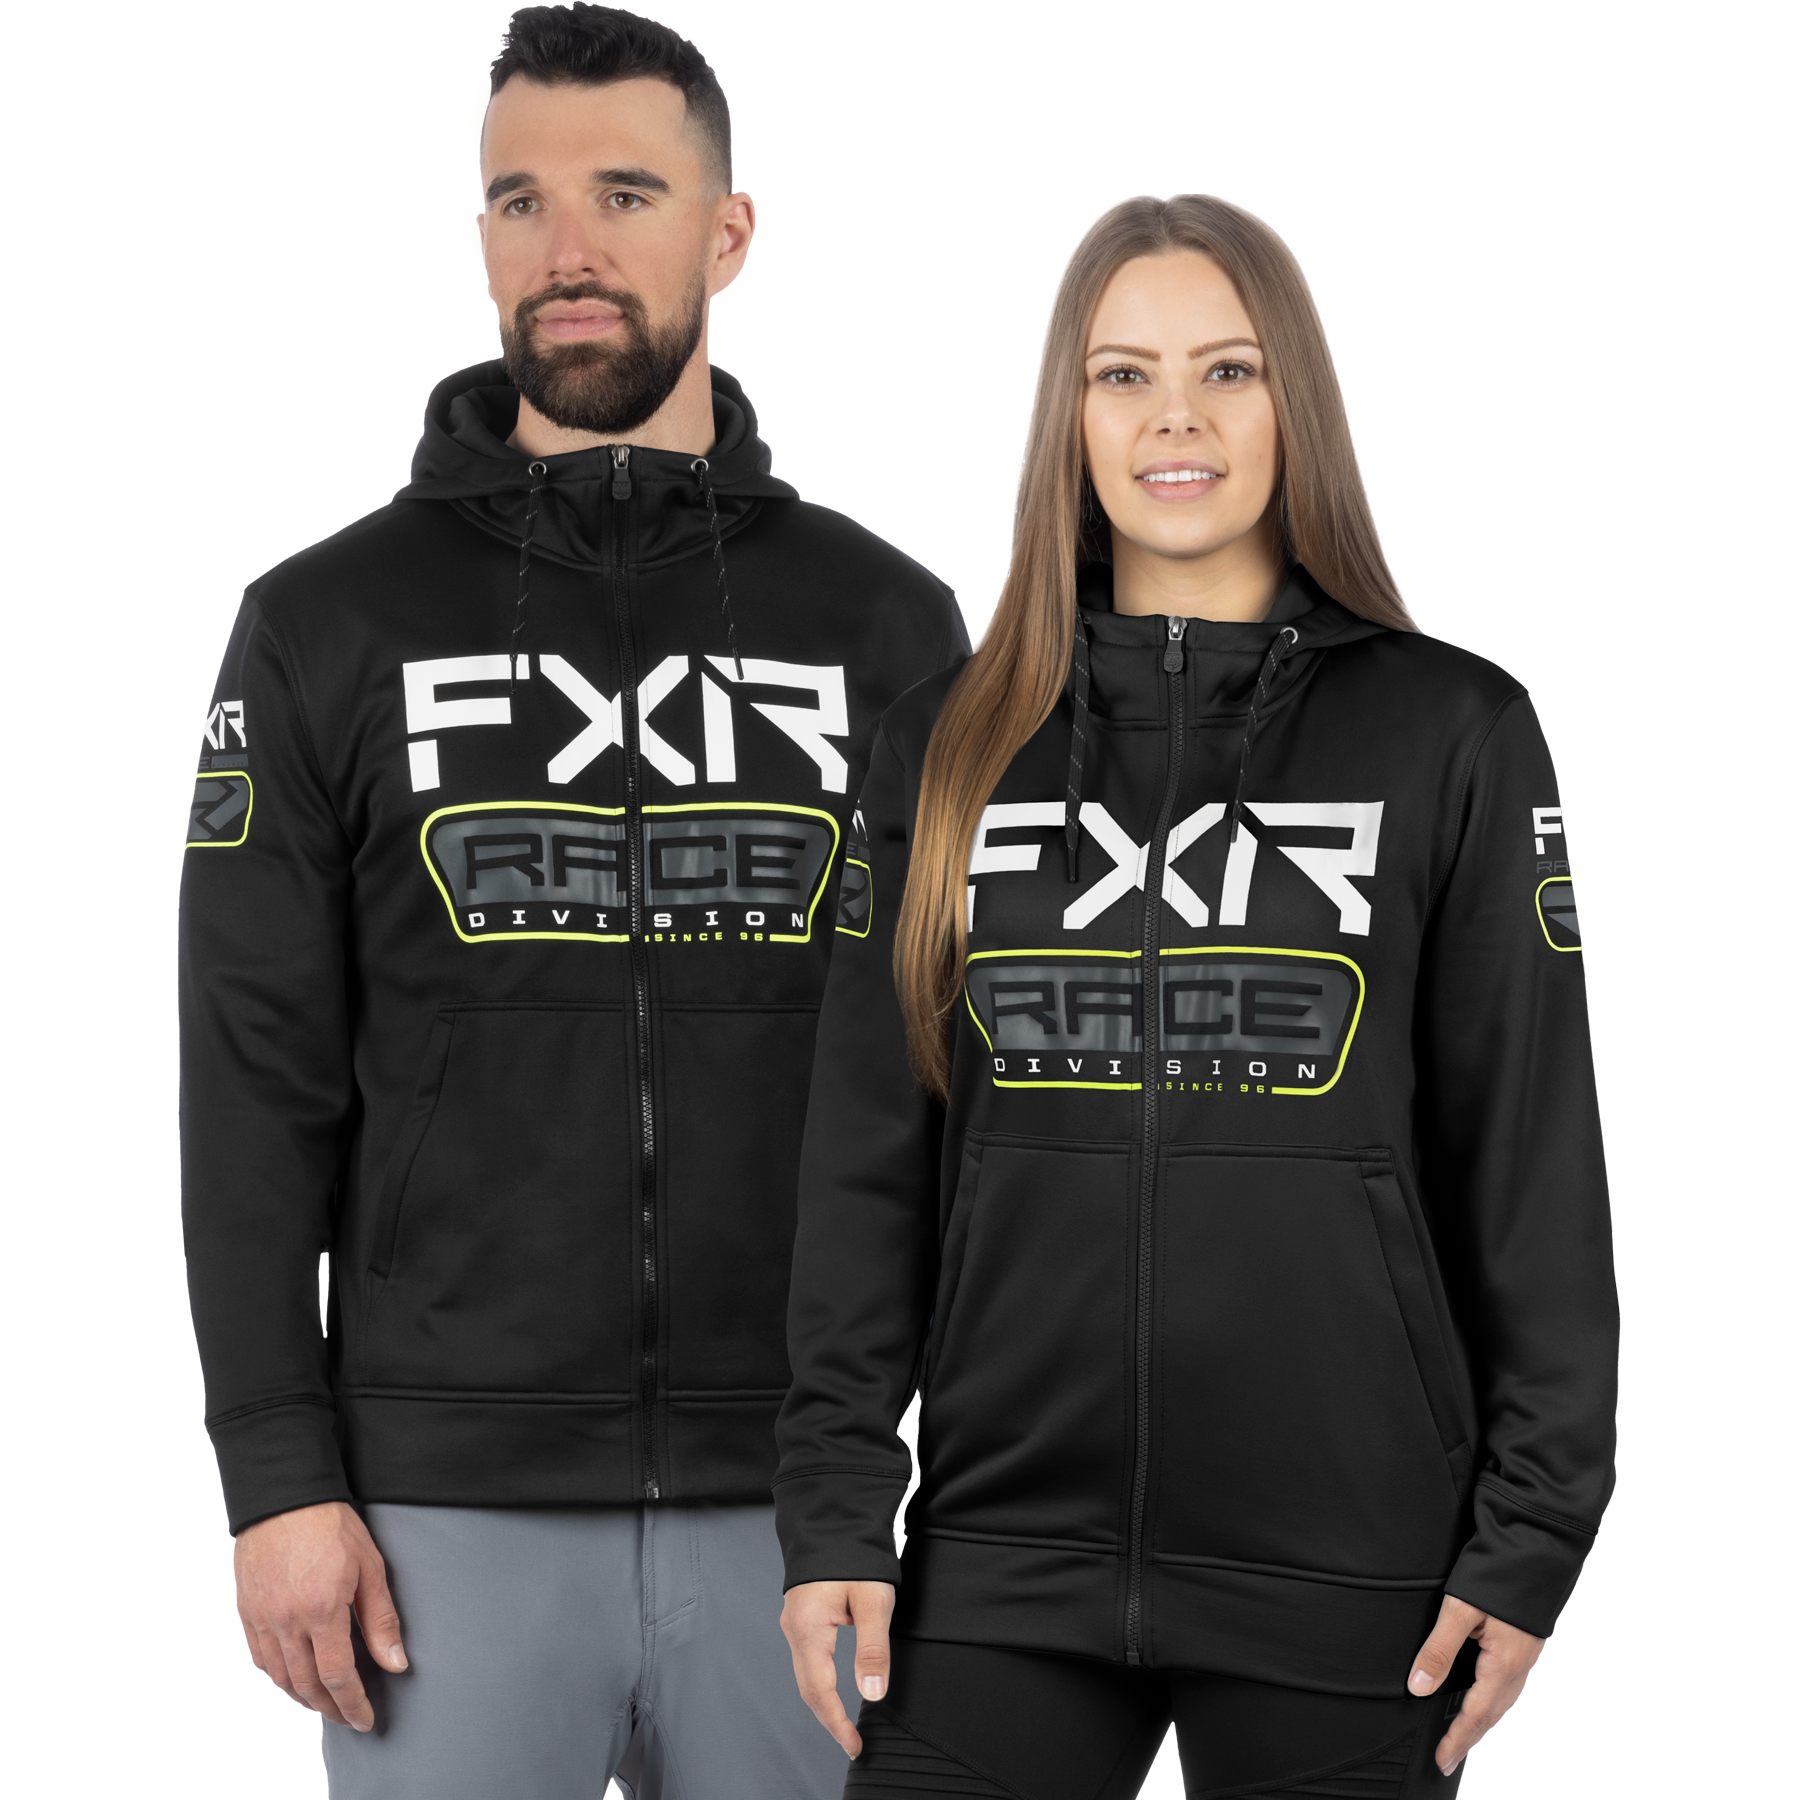 fxr racing hoodies adult unisex race division tech hoodies - casual